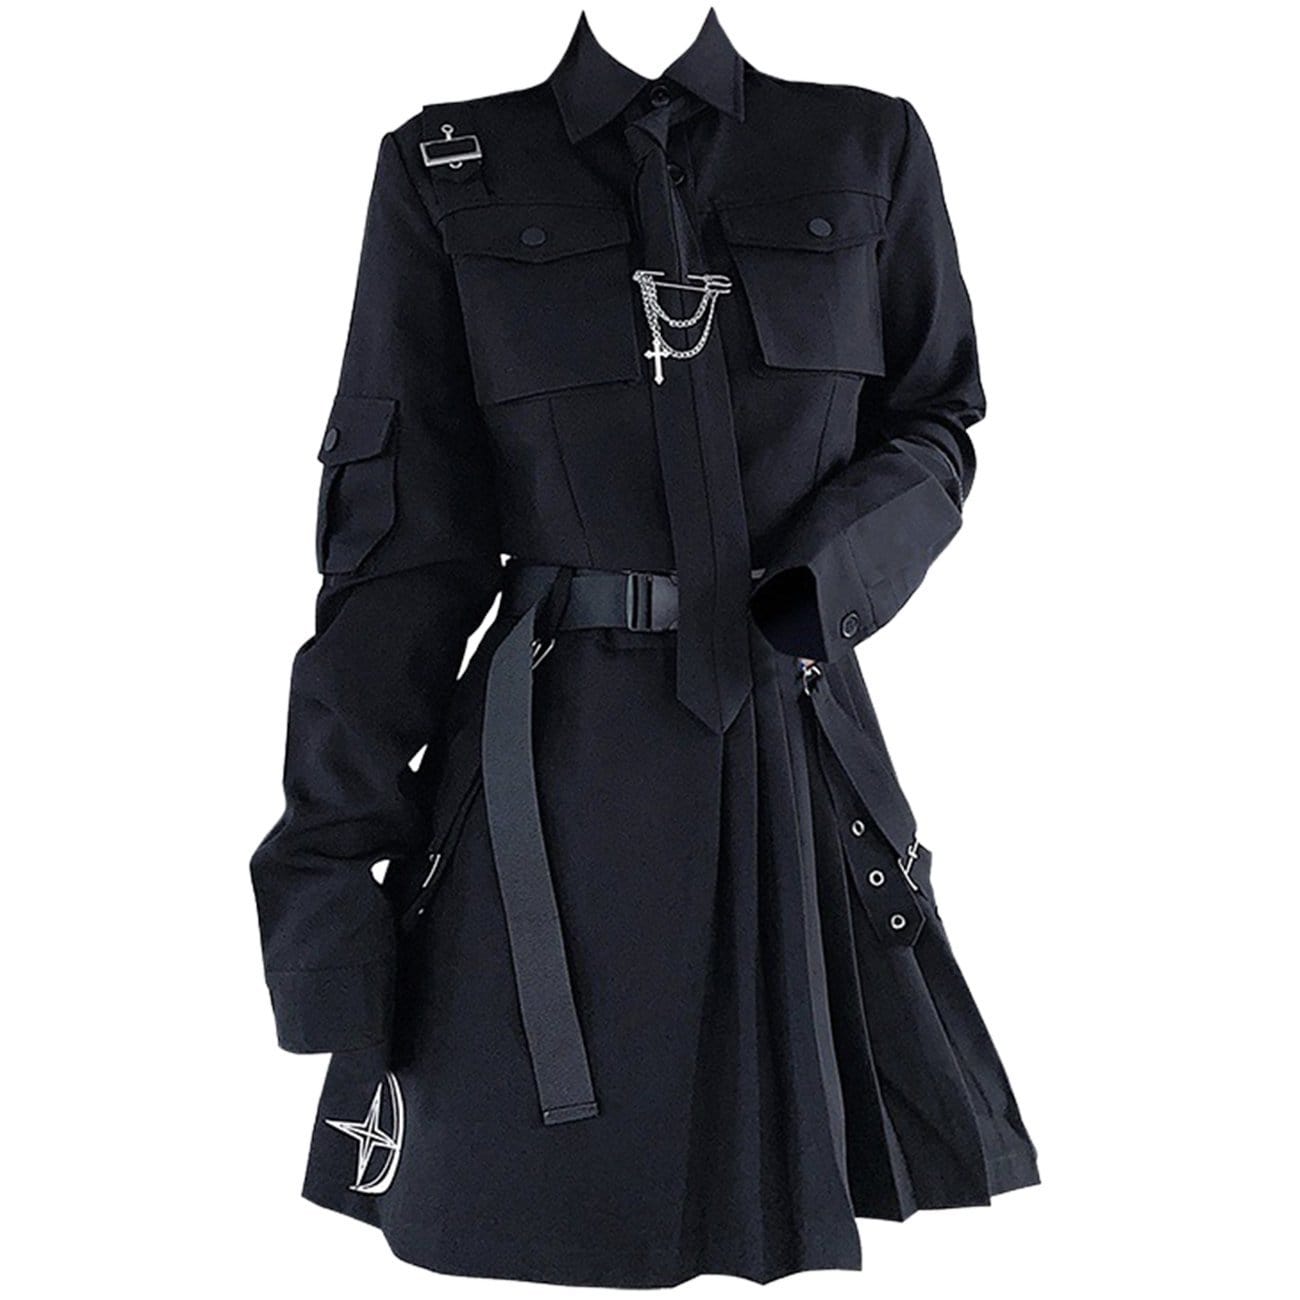 WLS Dark Gothic Exposed Waist Skirt Suit